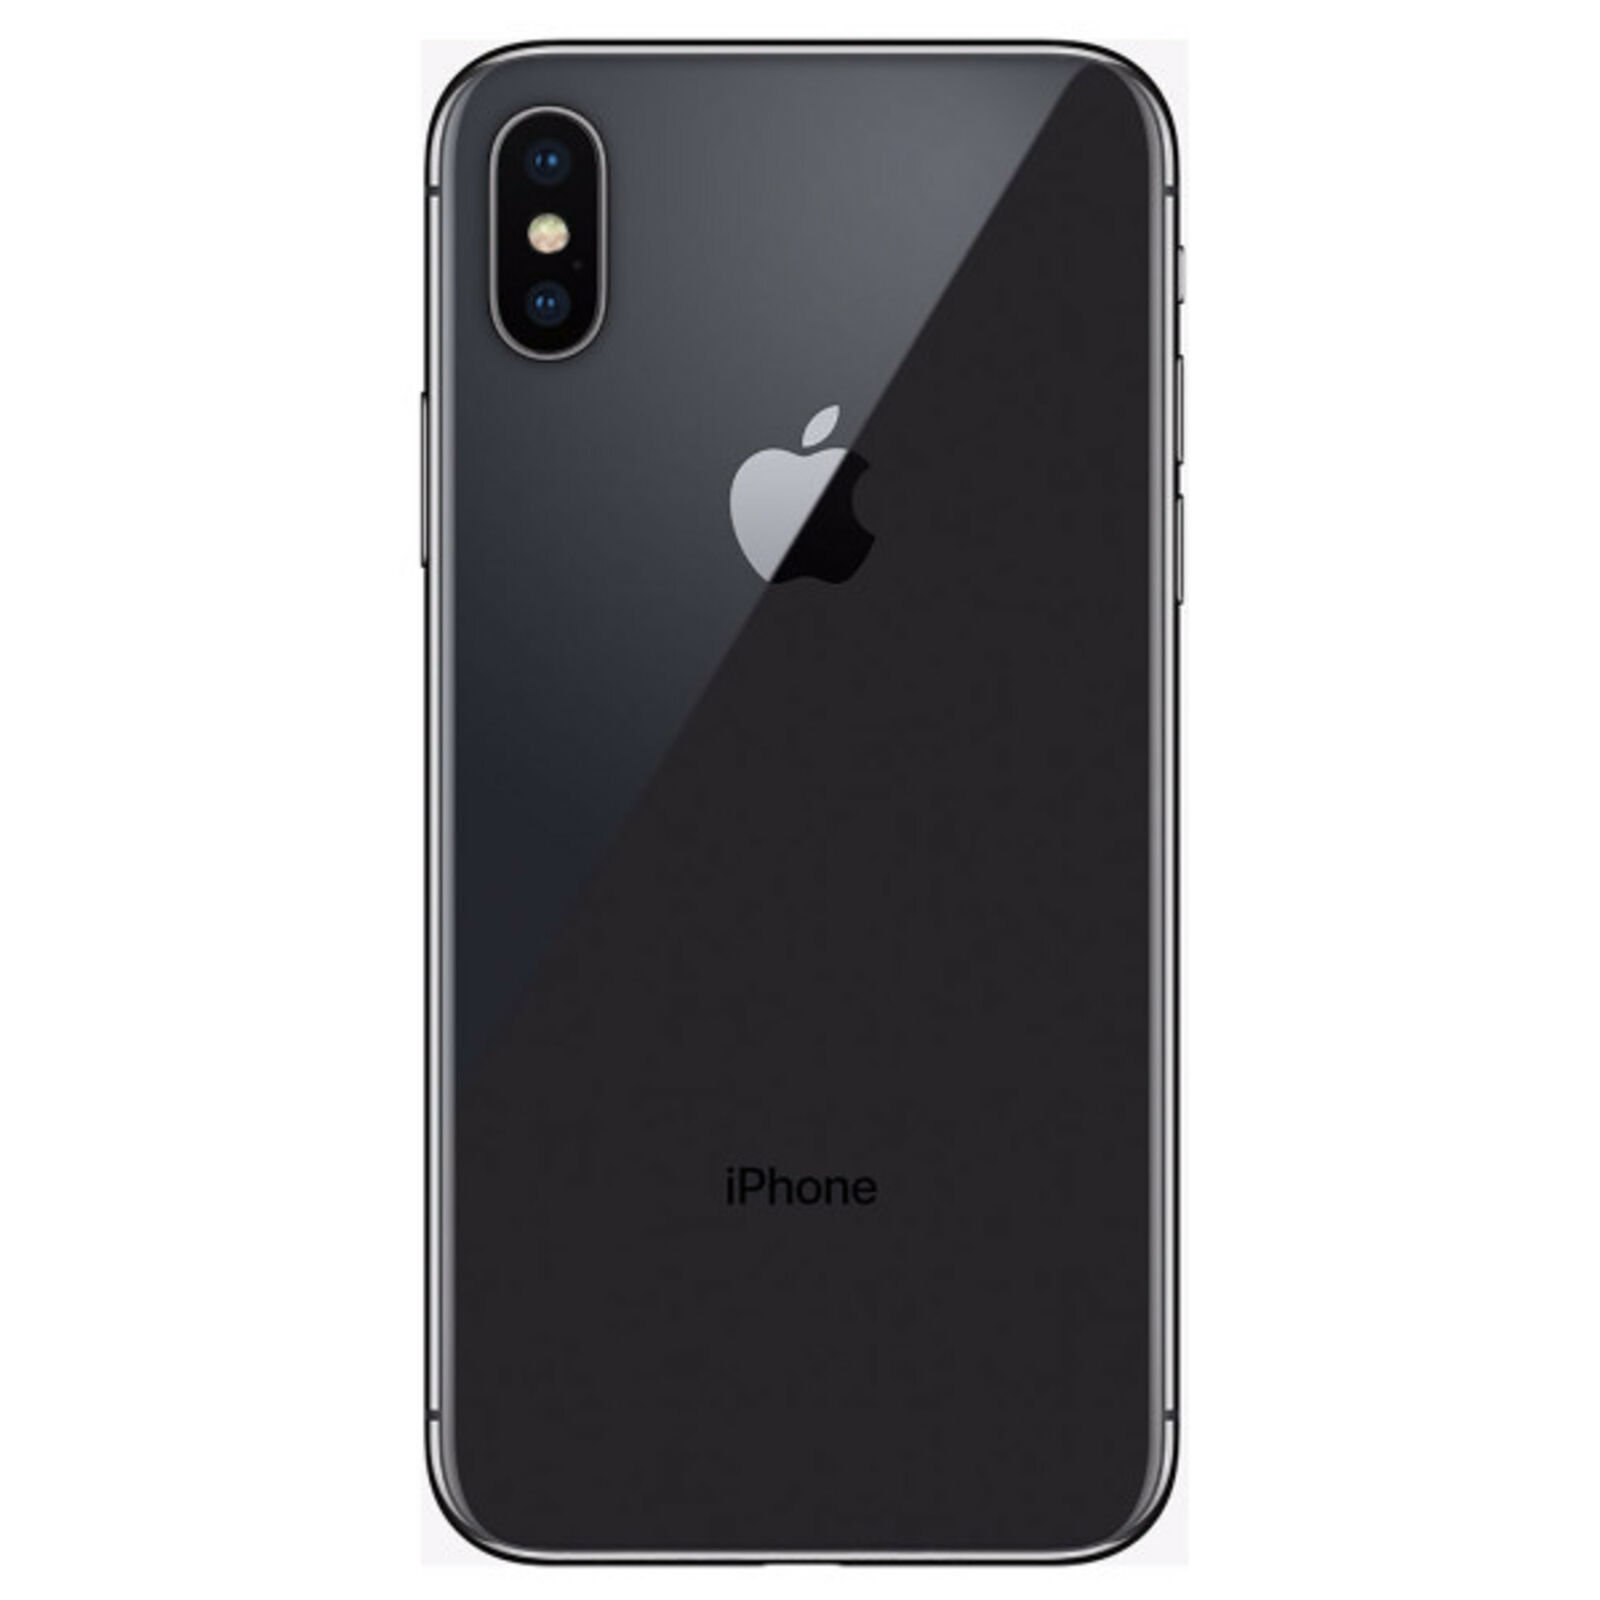 Apple iPhone X - 256GB - Space Gray (Unlocked) A1901 (GSM) (CA 